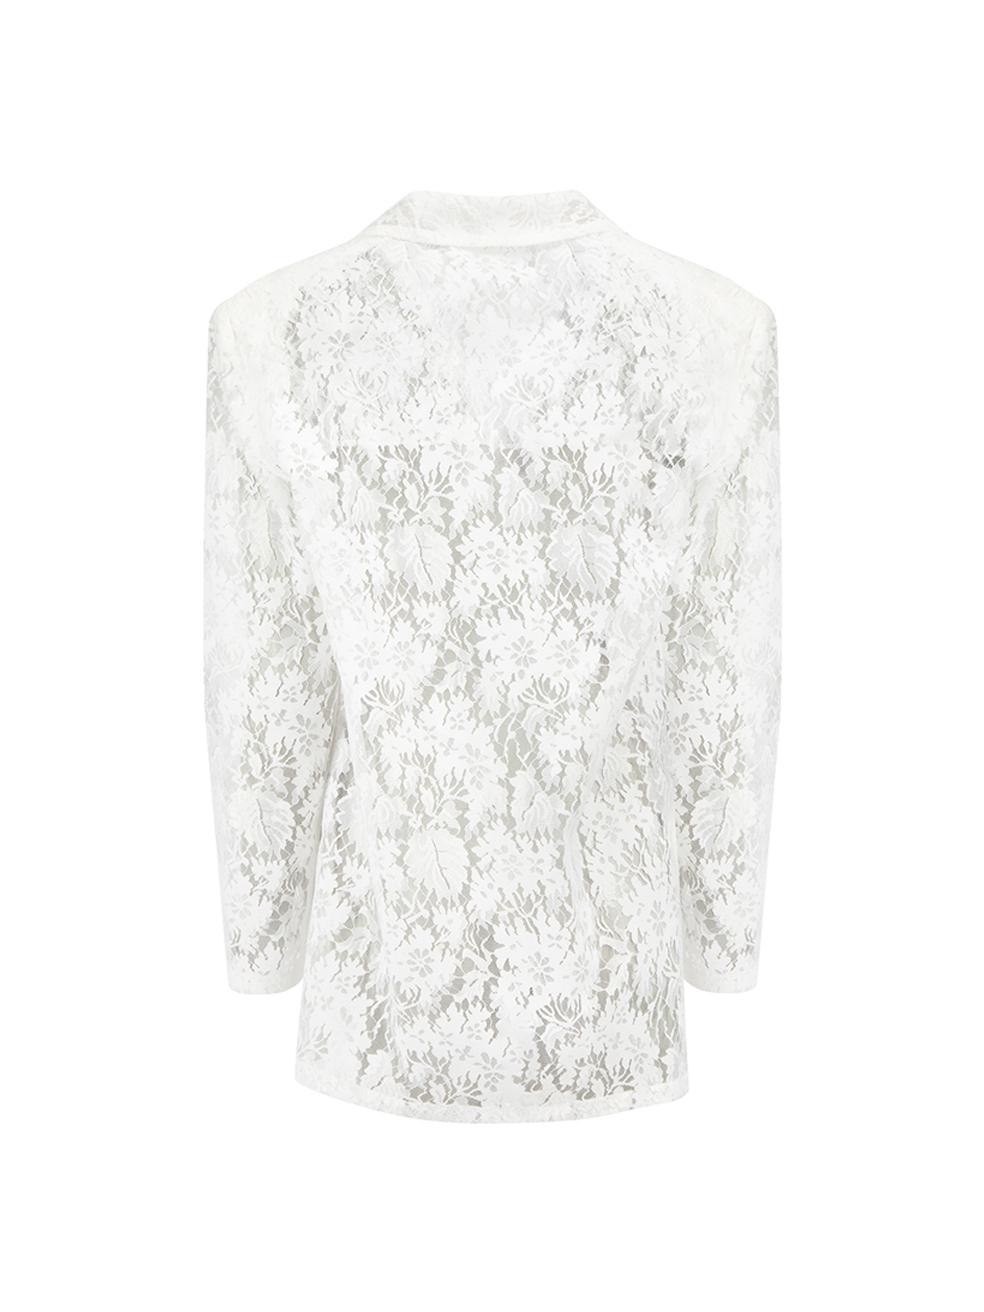 Gray Philosophy di Lorenzo Serafini White Lace Blazer Jacket Size XS